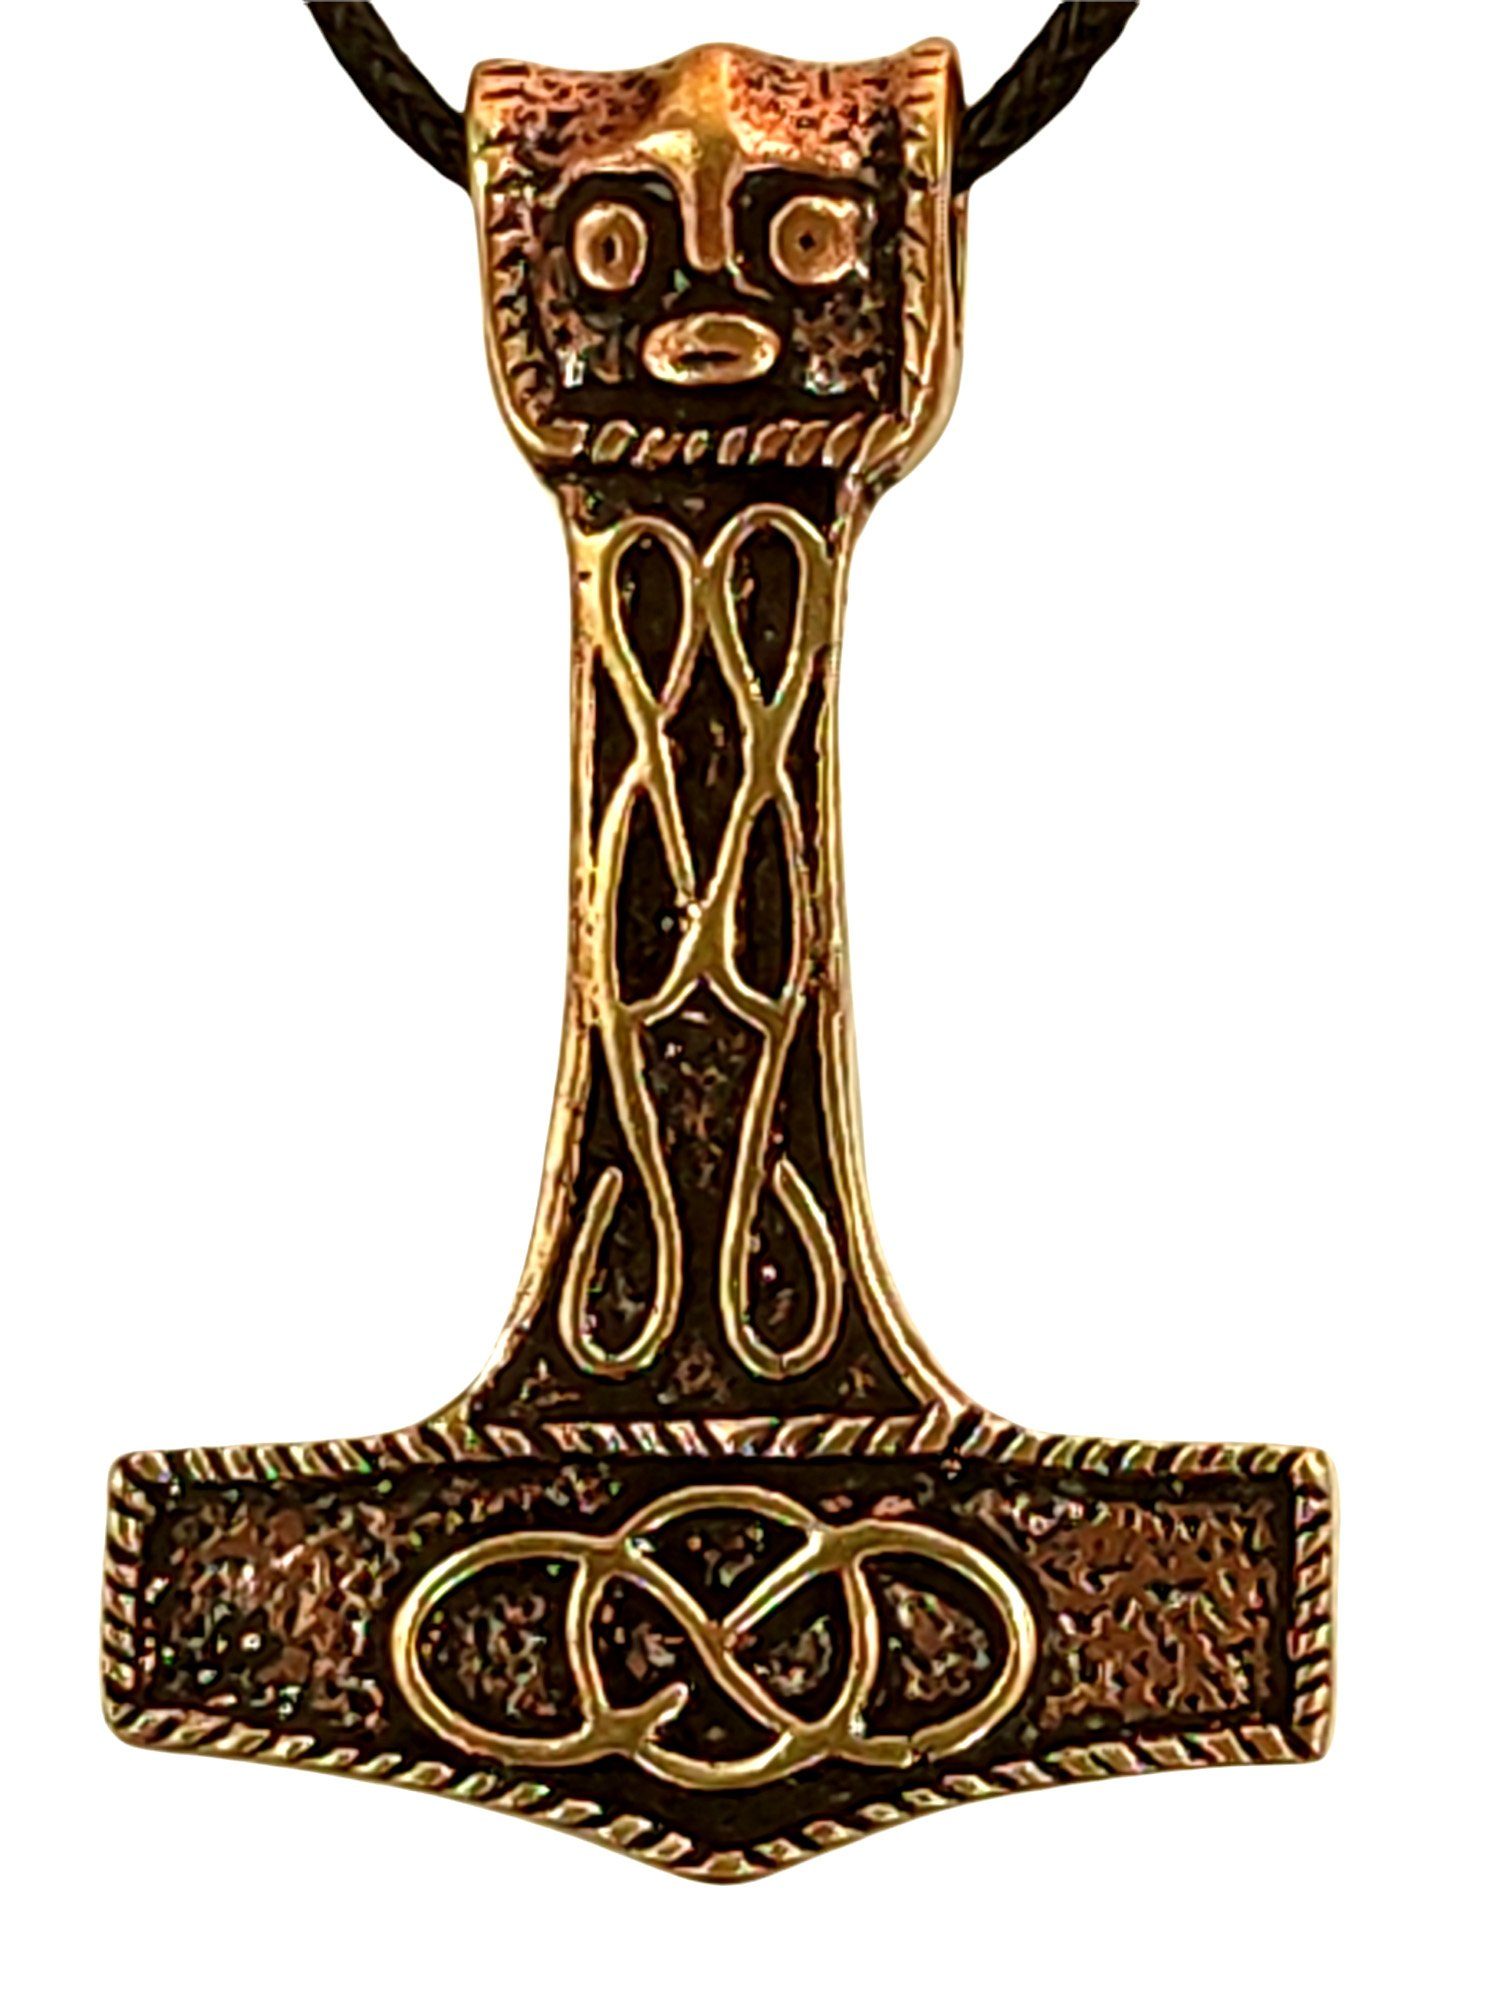 Thorhammer Anhänger Kettenanhänger großer Knoten Leather Thorshammer Thor 77A aus Kiss Hammer Bronze of Mjölnir